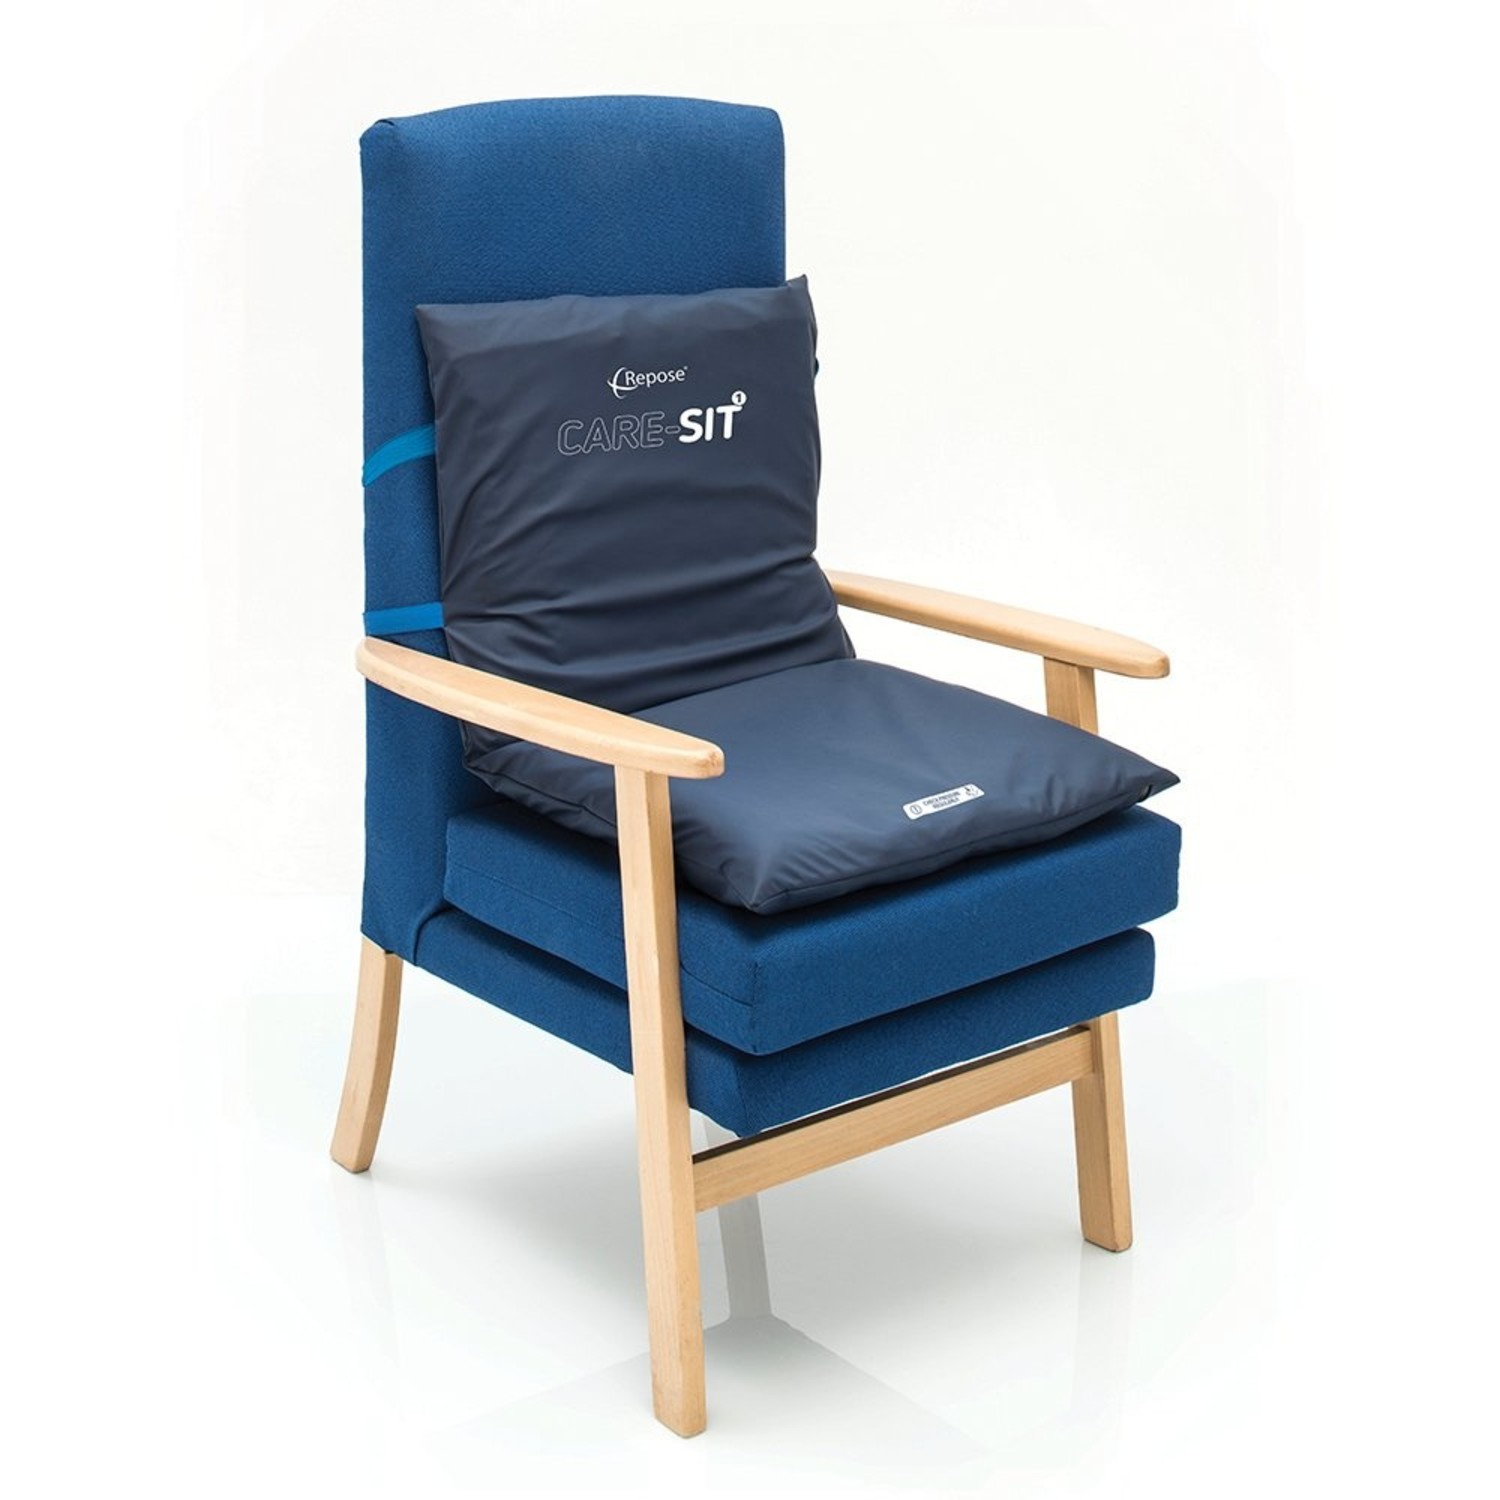 https://cdn.webshopapp.com/shops/231629/files/291385014/1500x1500x2/repose-care-sit-anti-decubitus-seat-cushion.jpg